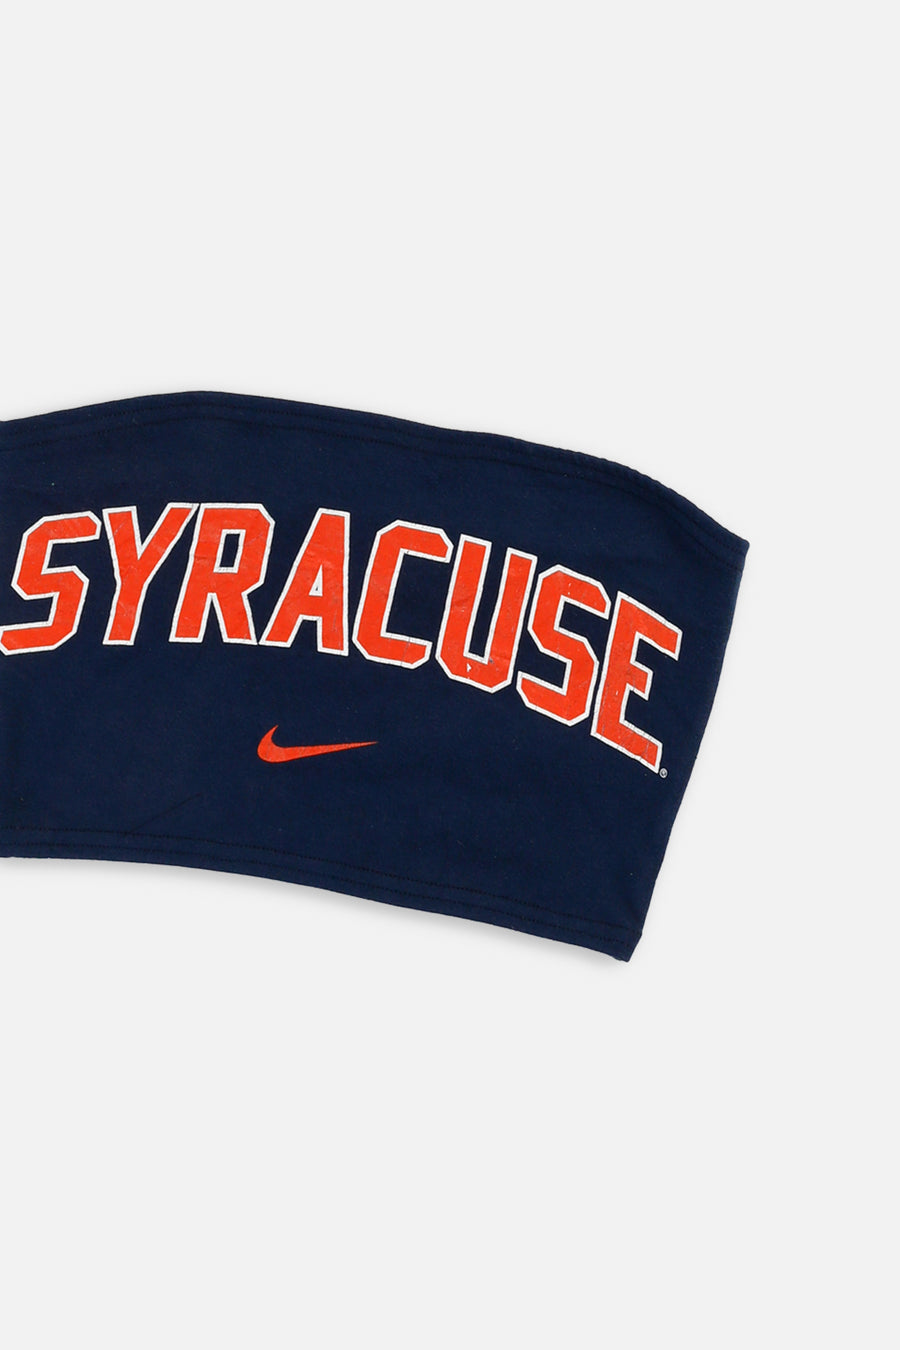 Rework Nike Syracuse Bandeau - S